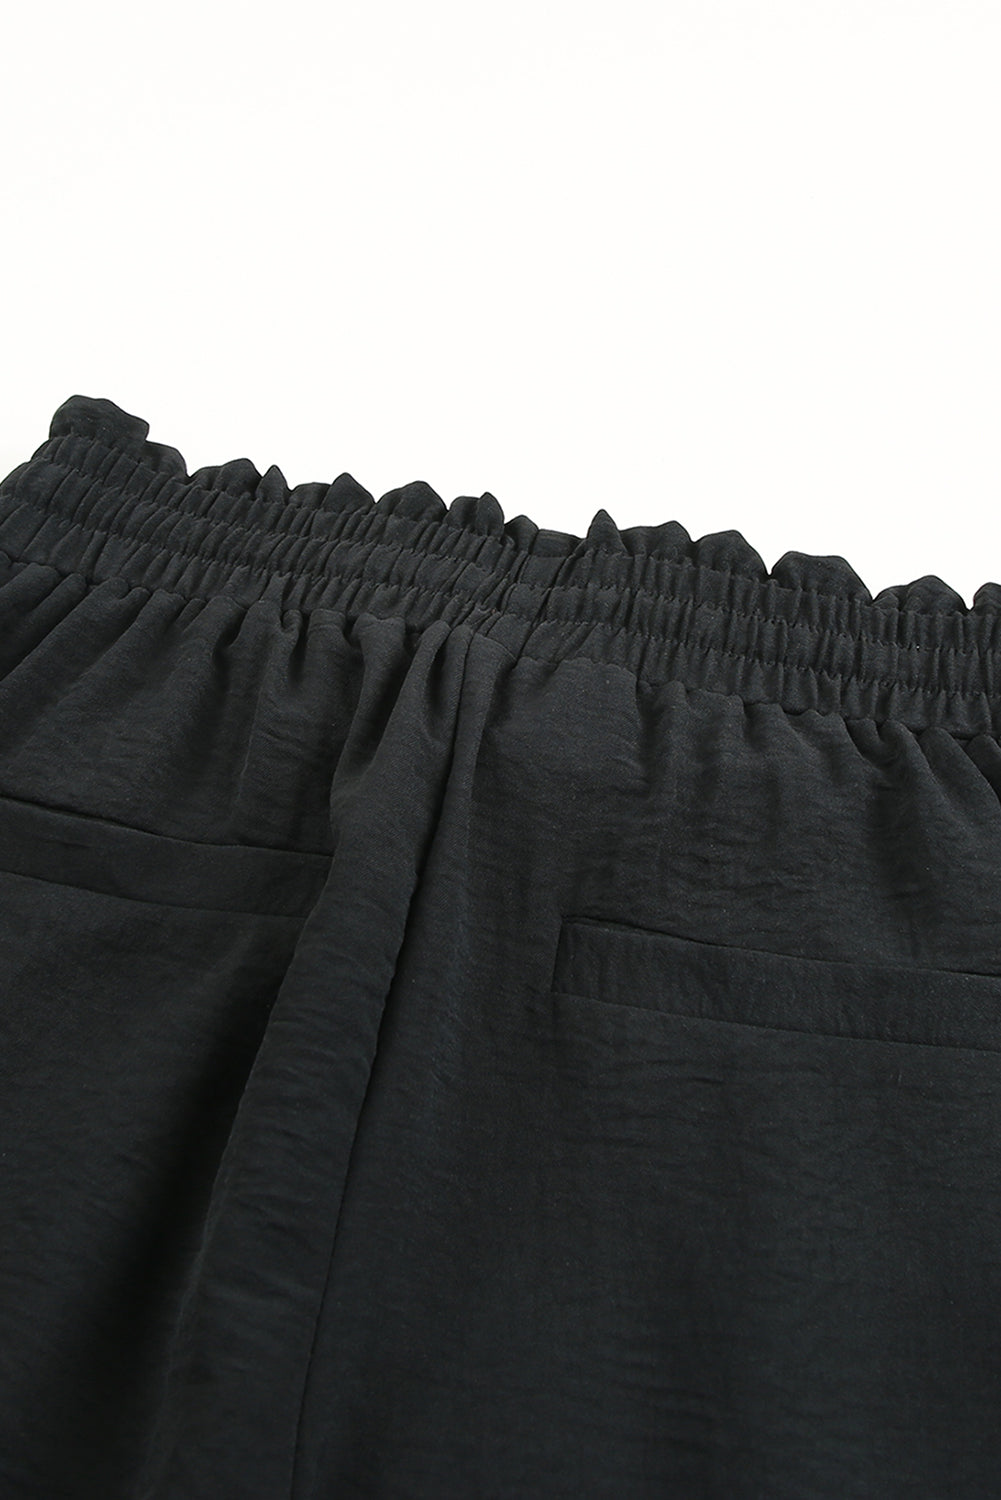 Black Solid Color Drawstring Smocked Waist Womens Pants Joggers - US2EInc Apparel Plug Ltd. Co